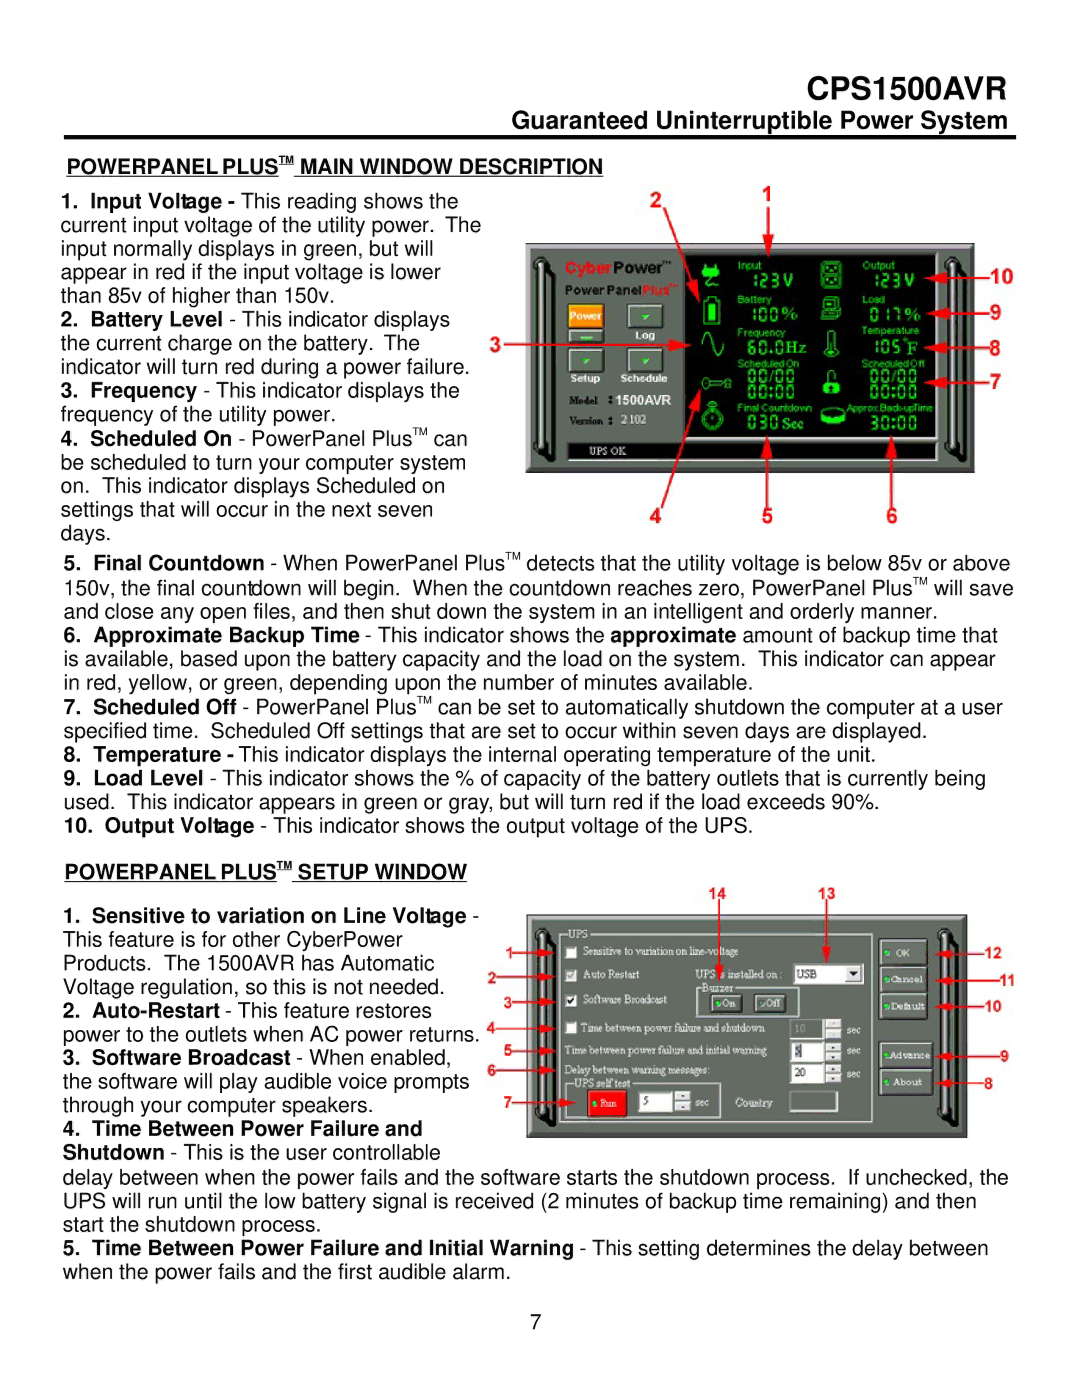 CyberPower Systems CPS1500AVR user manual Powerpanel Plustm Main Window Description, Powerpanel Plustm Setup Window 